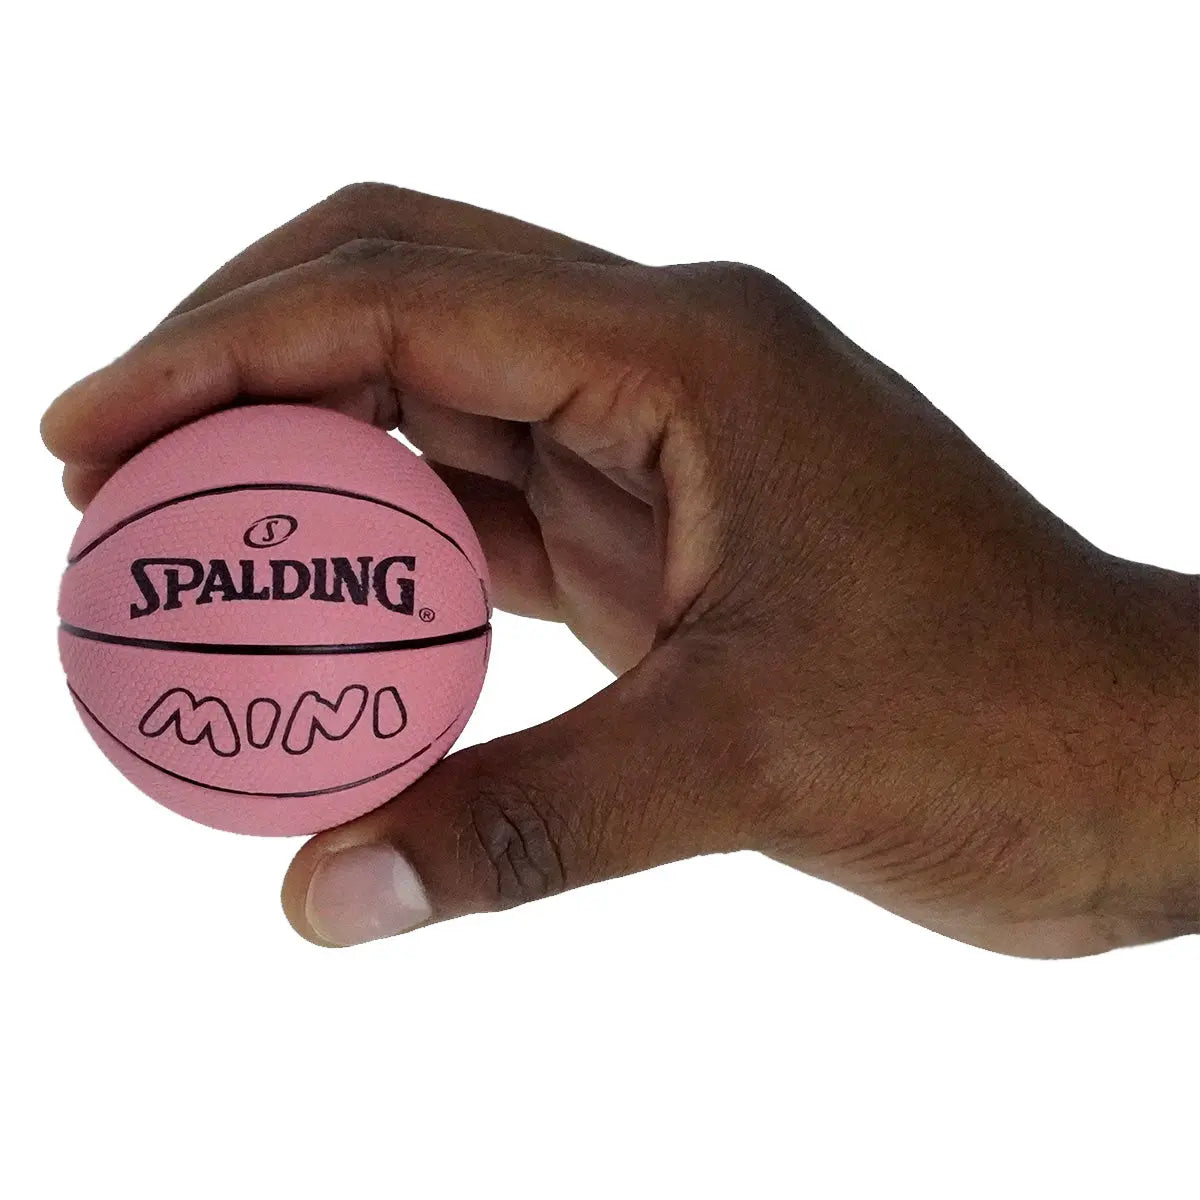 Spalding High Bounce Spaldeen Mini Basketball Spalding